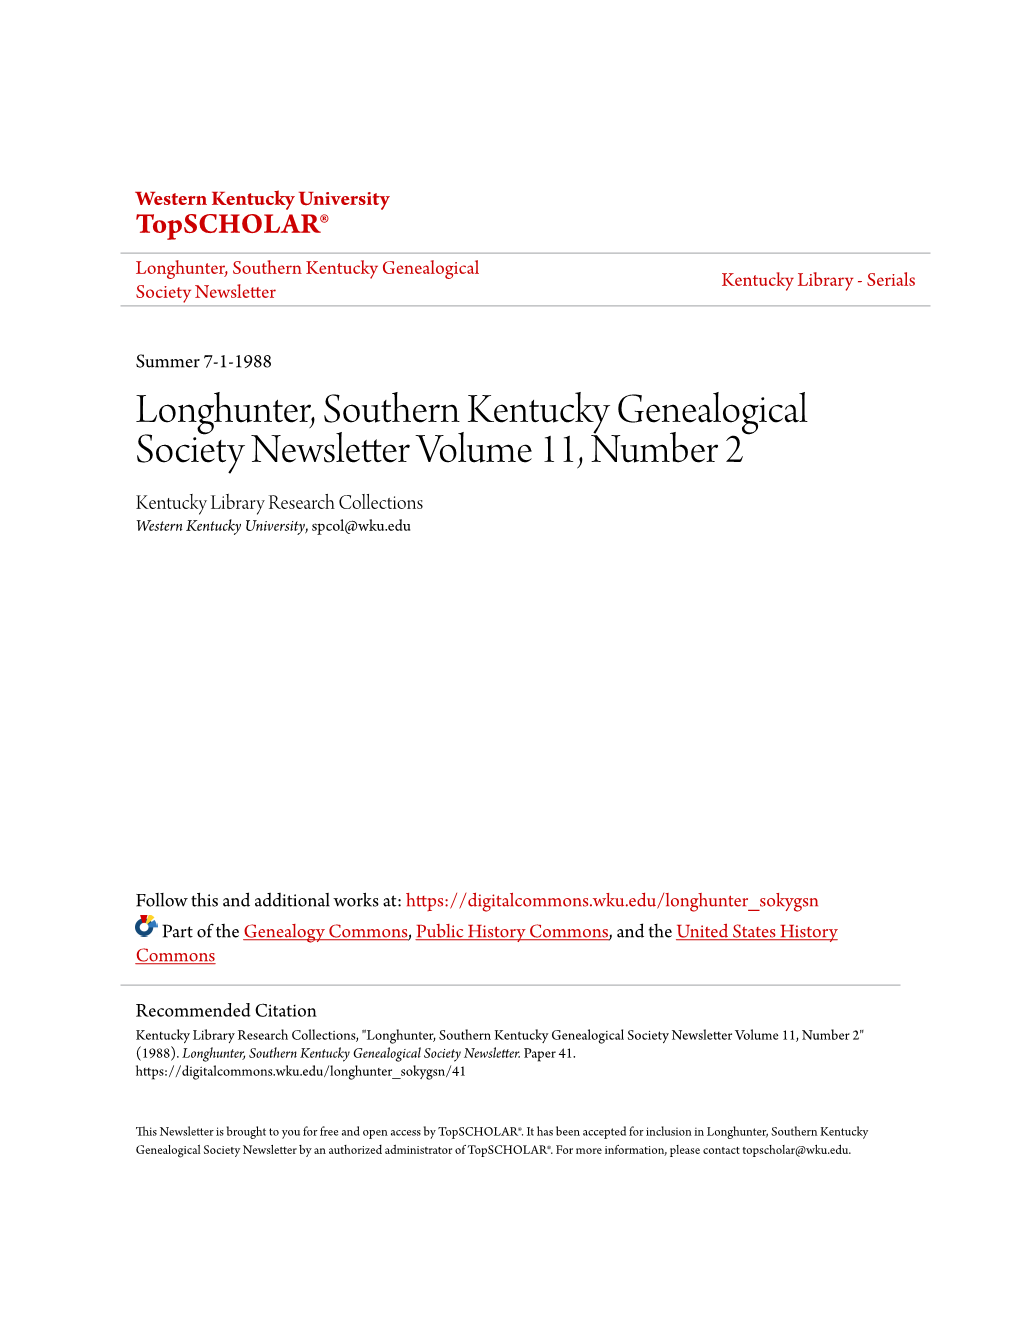 Longhunter, Southern Kentucky Genealogical Society Newsletter Volume 11, Number 2 Kentucky Library Research Collections Western Kentucky University, Spcol@Wku.Edu